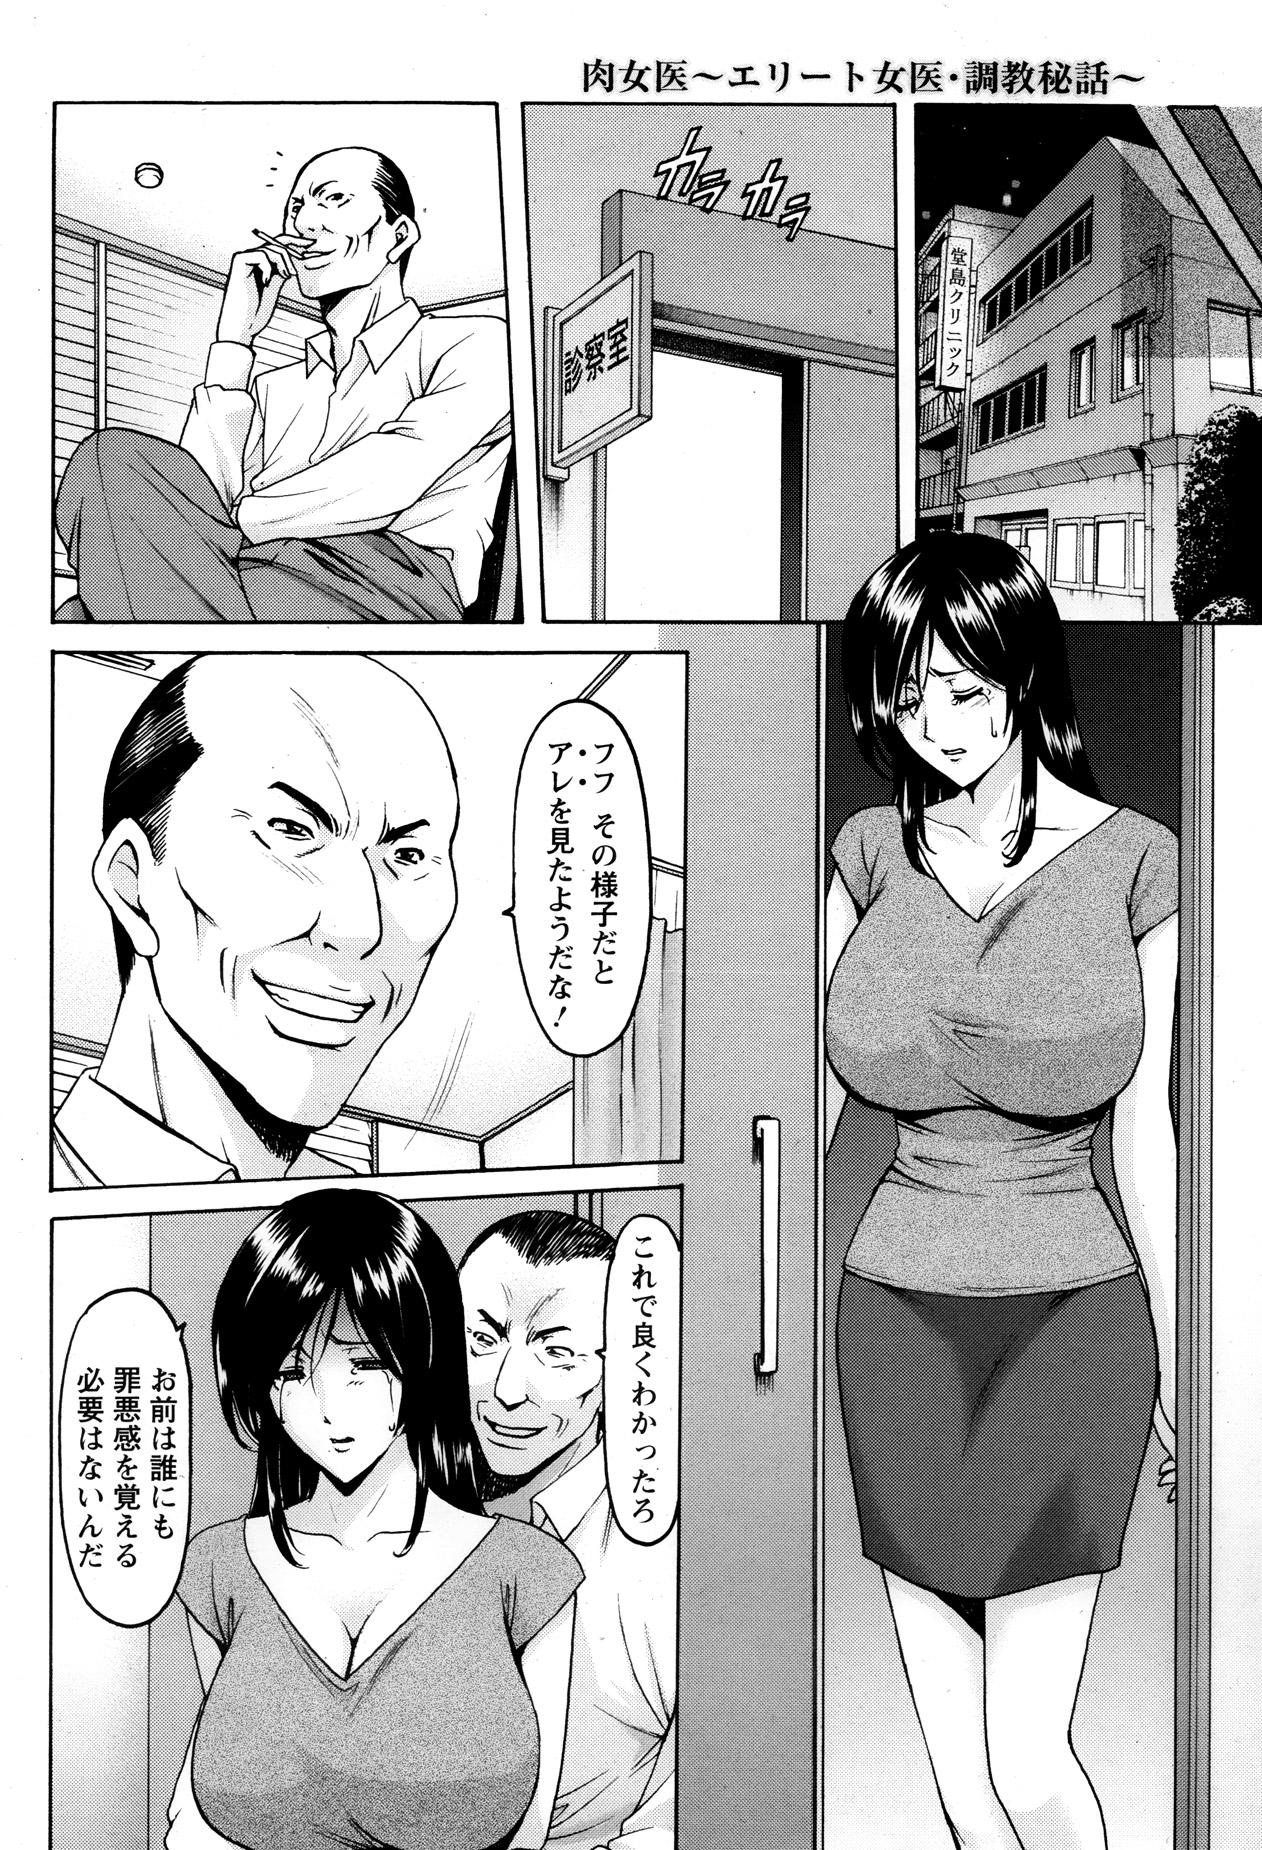 [Hoshino Ryuuichi] Meat Female Doctor - elite Female Doctor, Taming secret story- 01~06 59